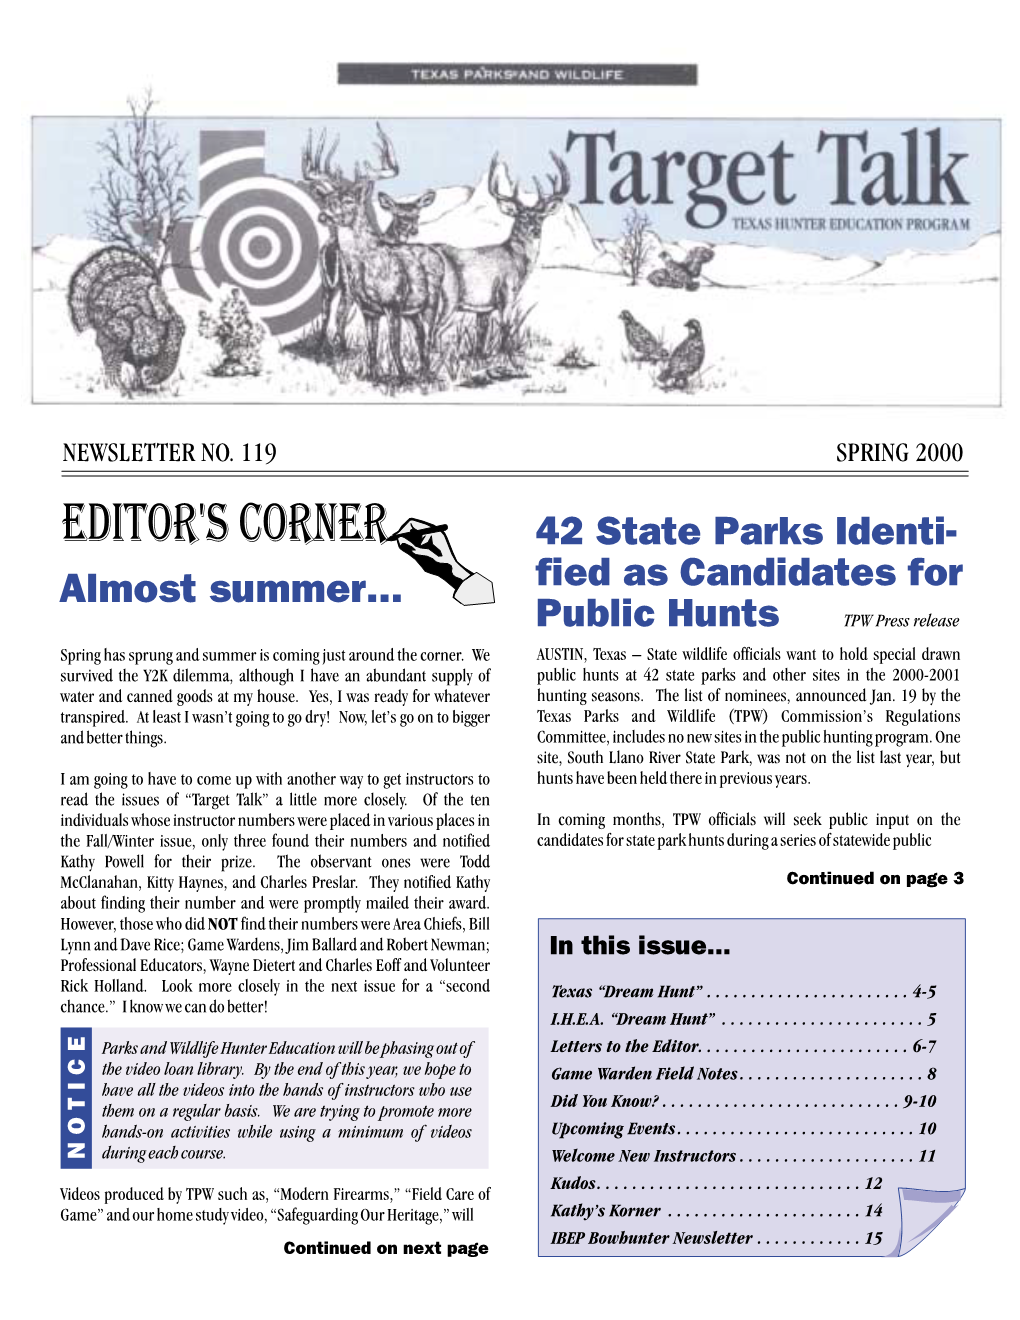 Spring 2000, Hunter Education Instructors Information Monthly Newsletter